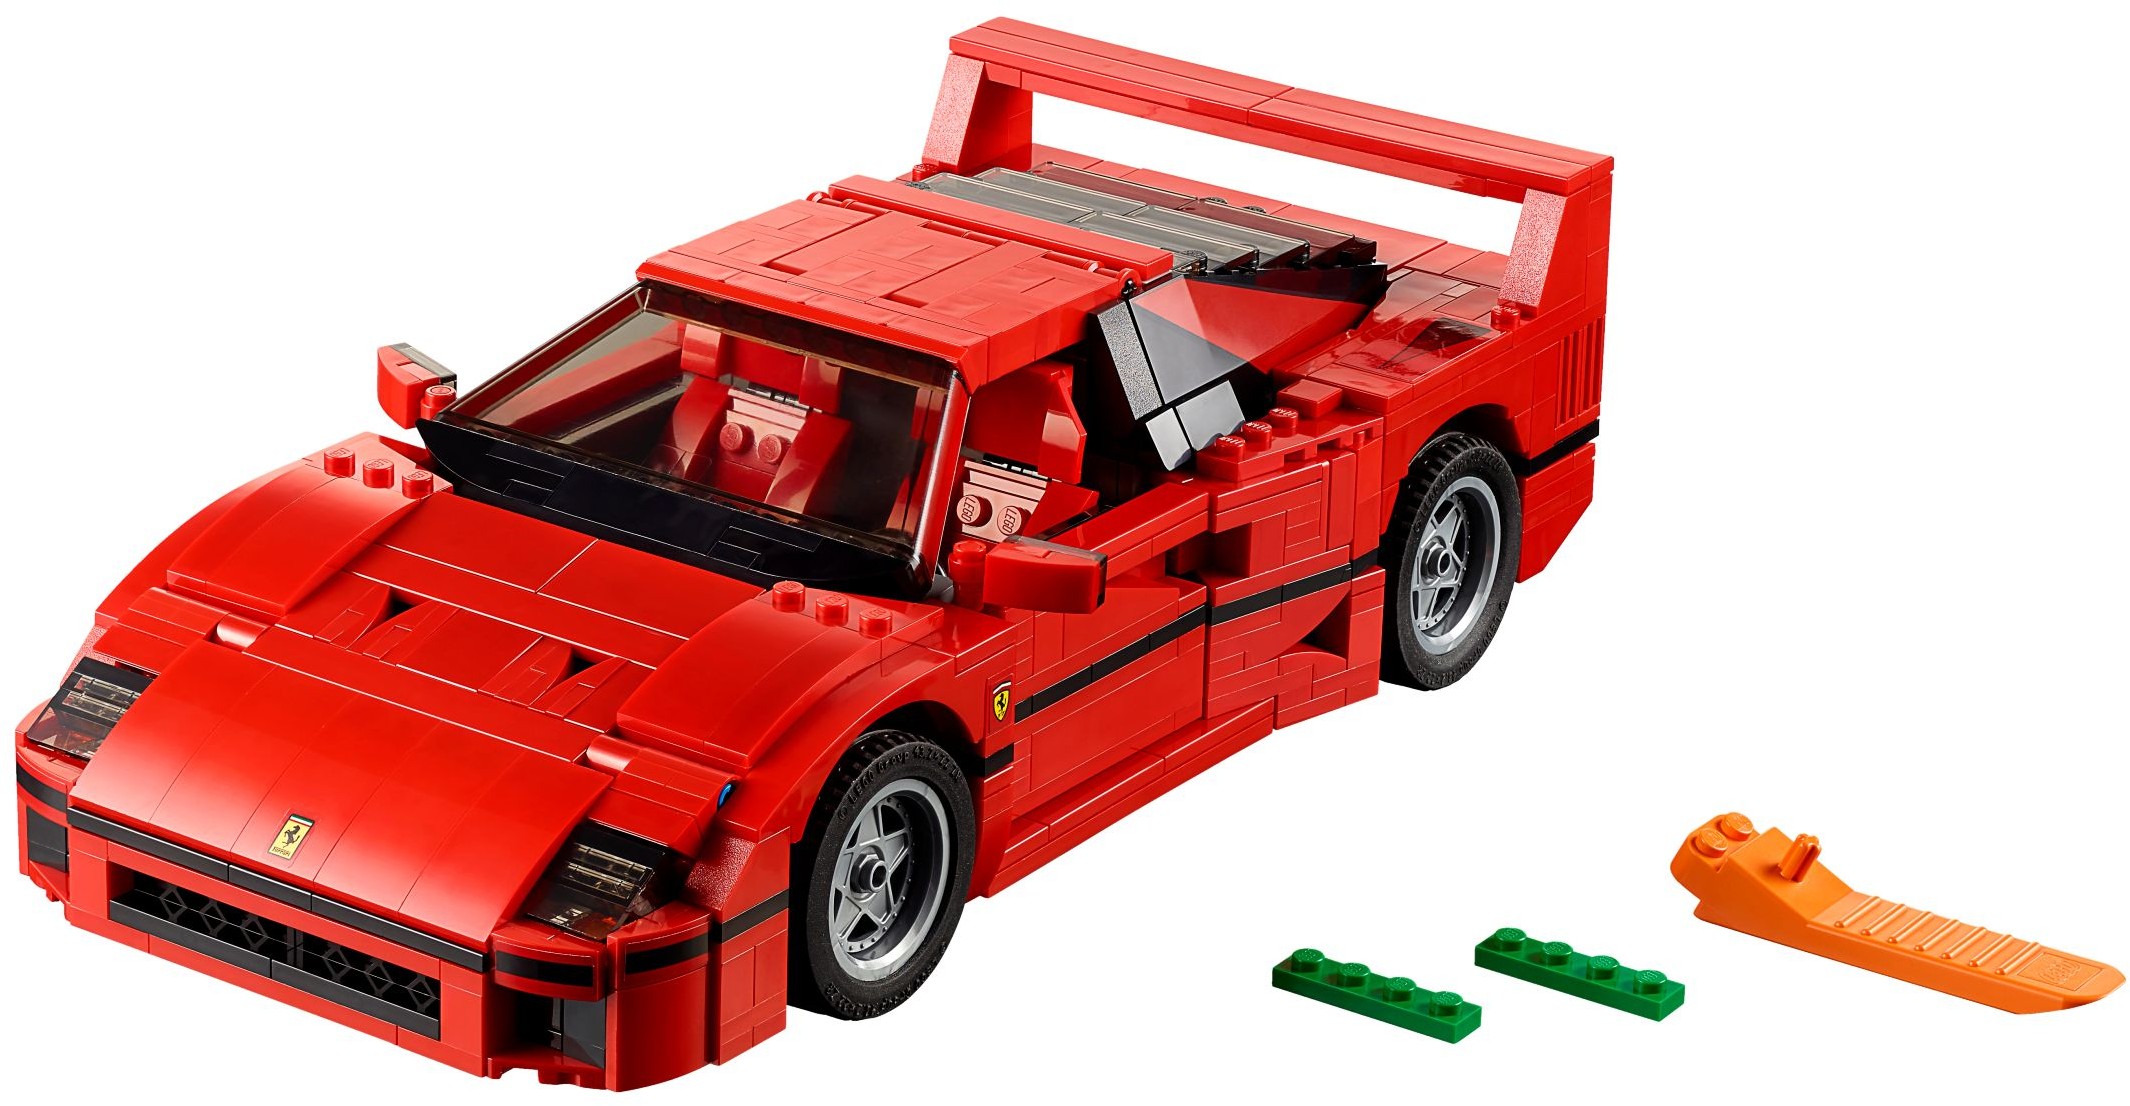 LEGO Ferrari F40 Even Has a Toolkit